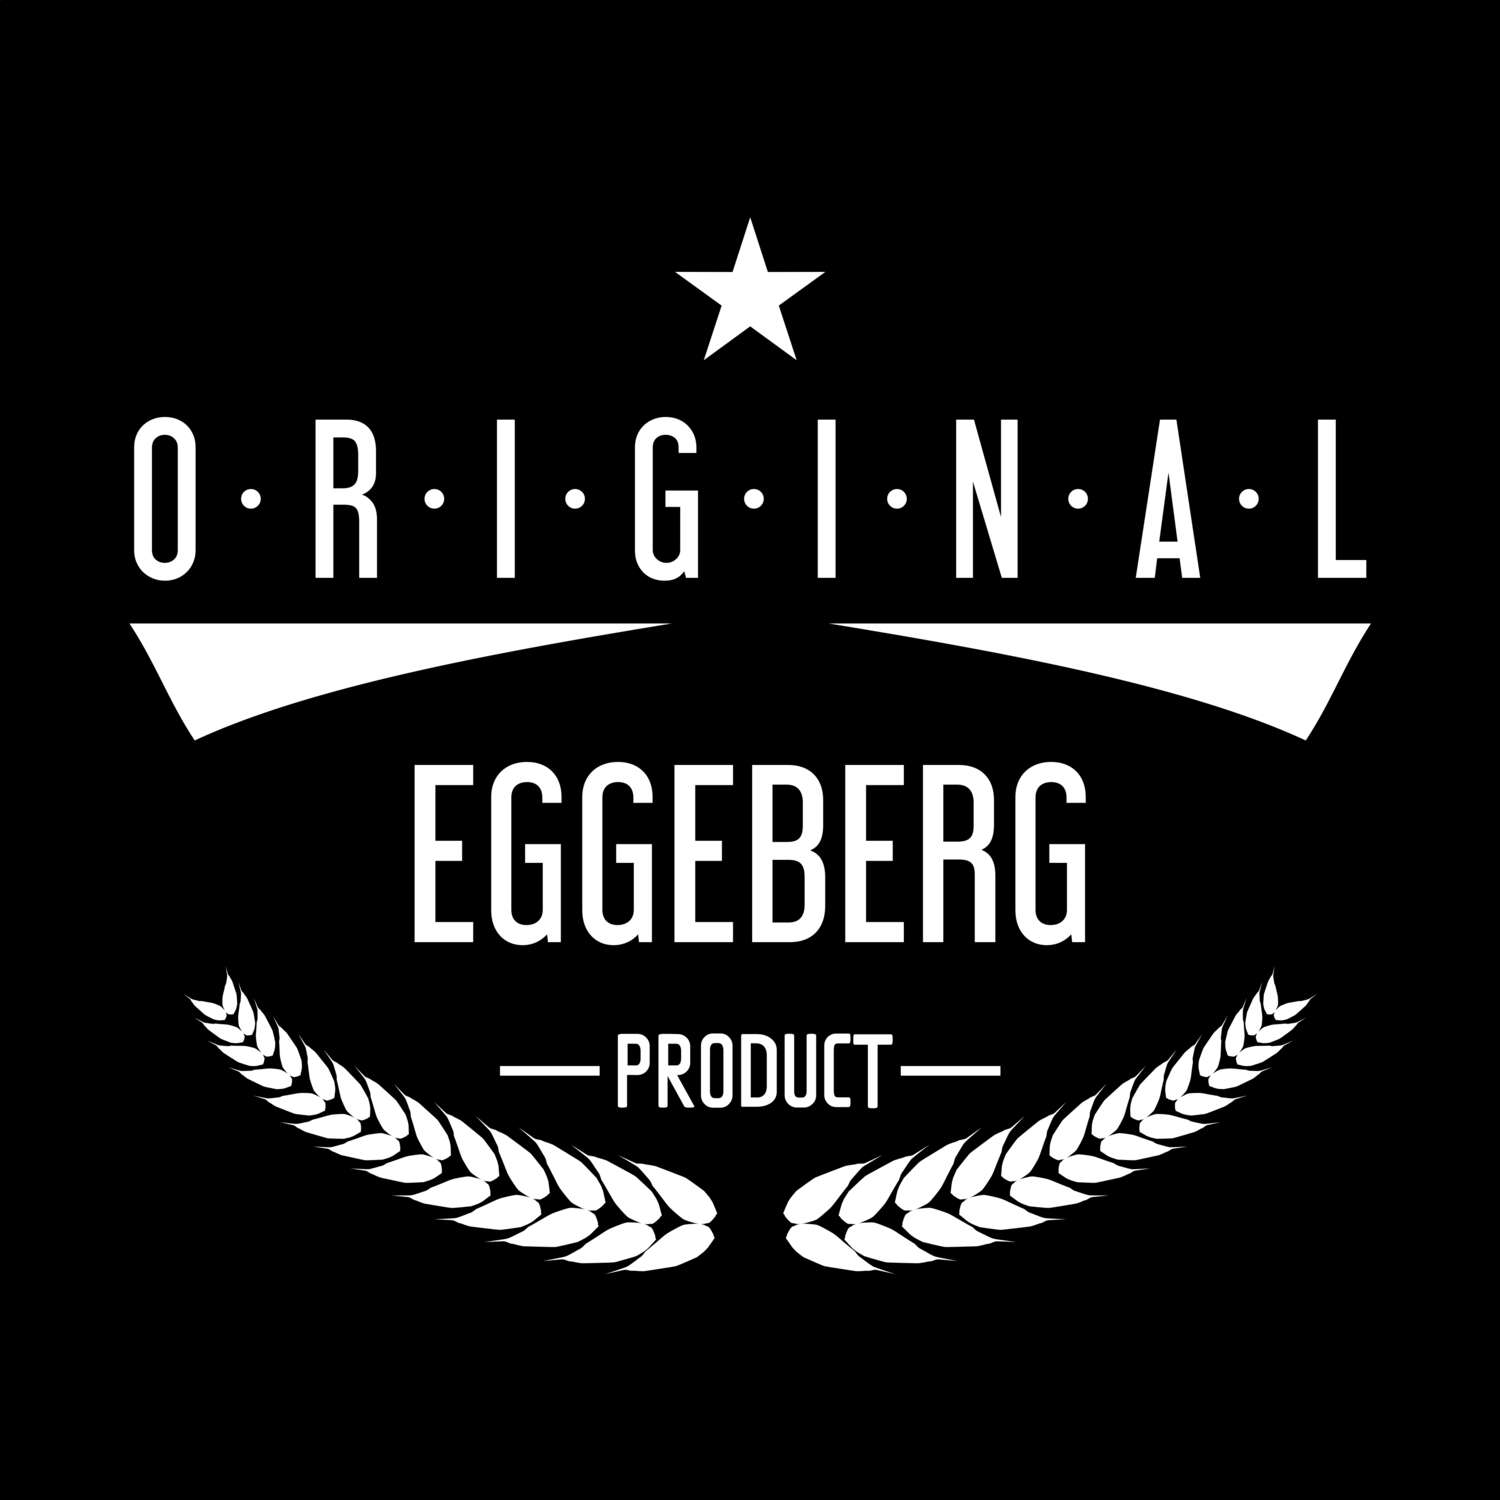 Eggeberg T-Shirt »Original Product«